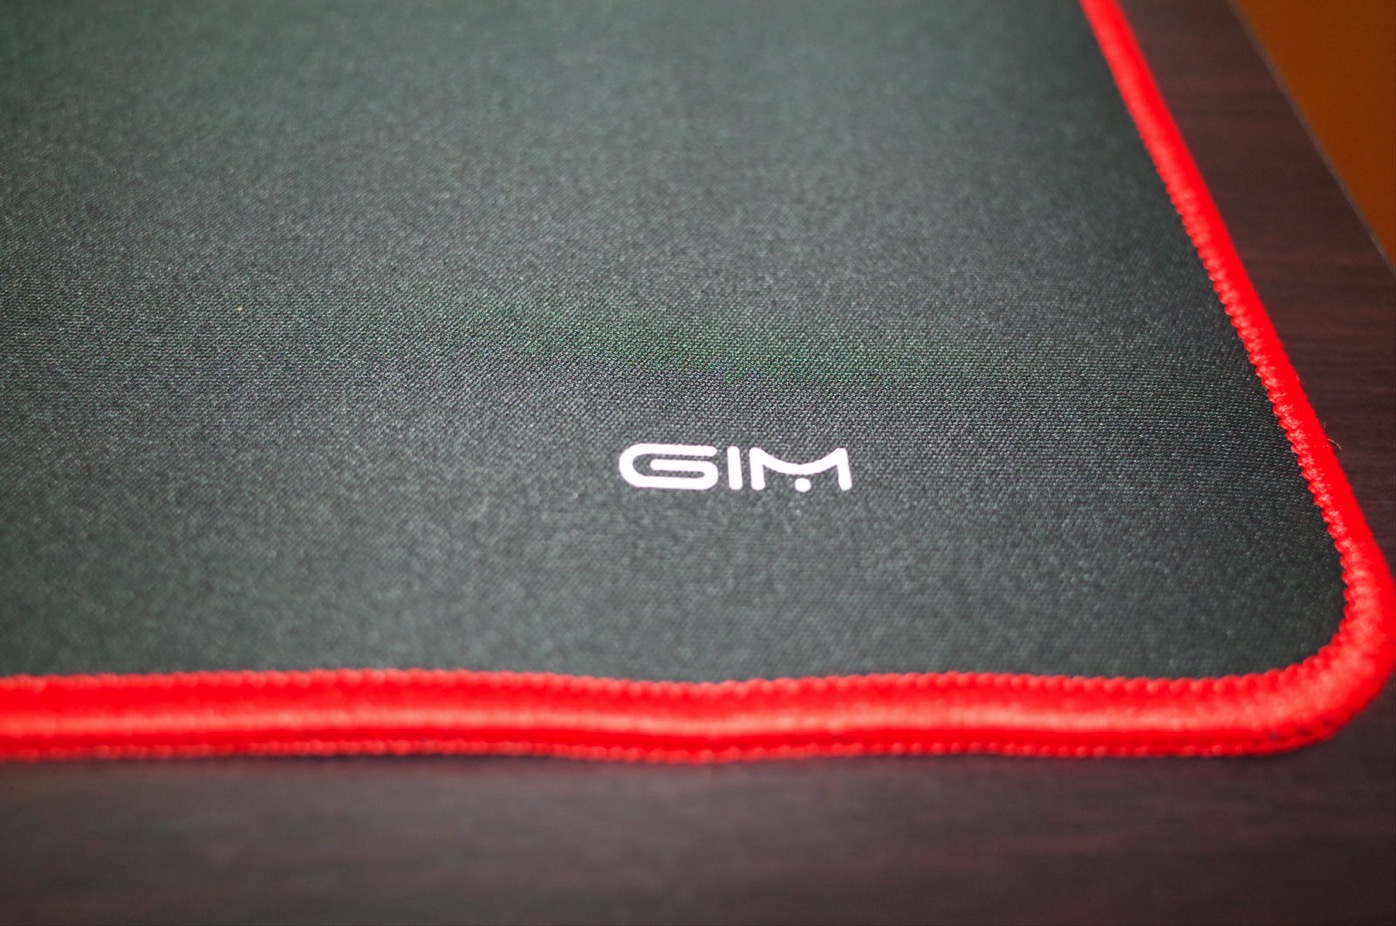 GIM マウスパッド 大型 ゲーミング 超大型 ゲーミングマウスパッド 防水 滑り止め キーボードパッド オフィス 布製 レーザー&光学式マウス対応-4